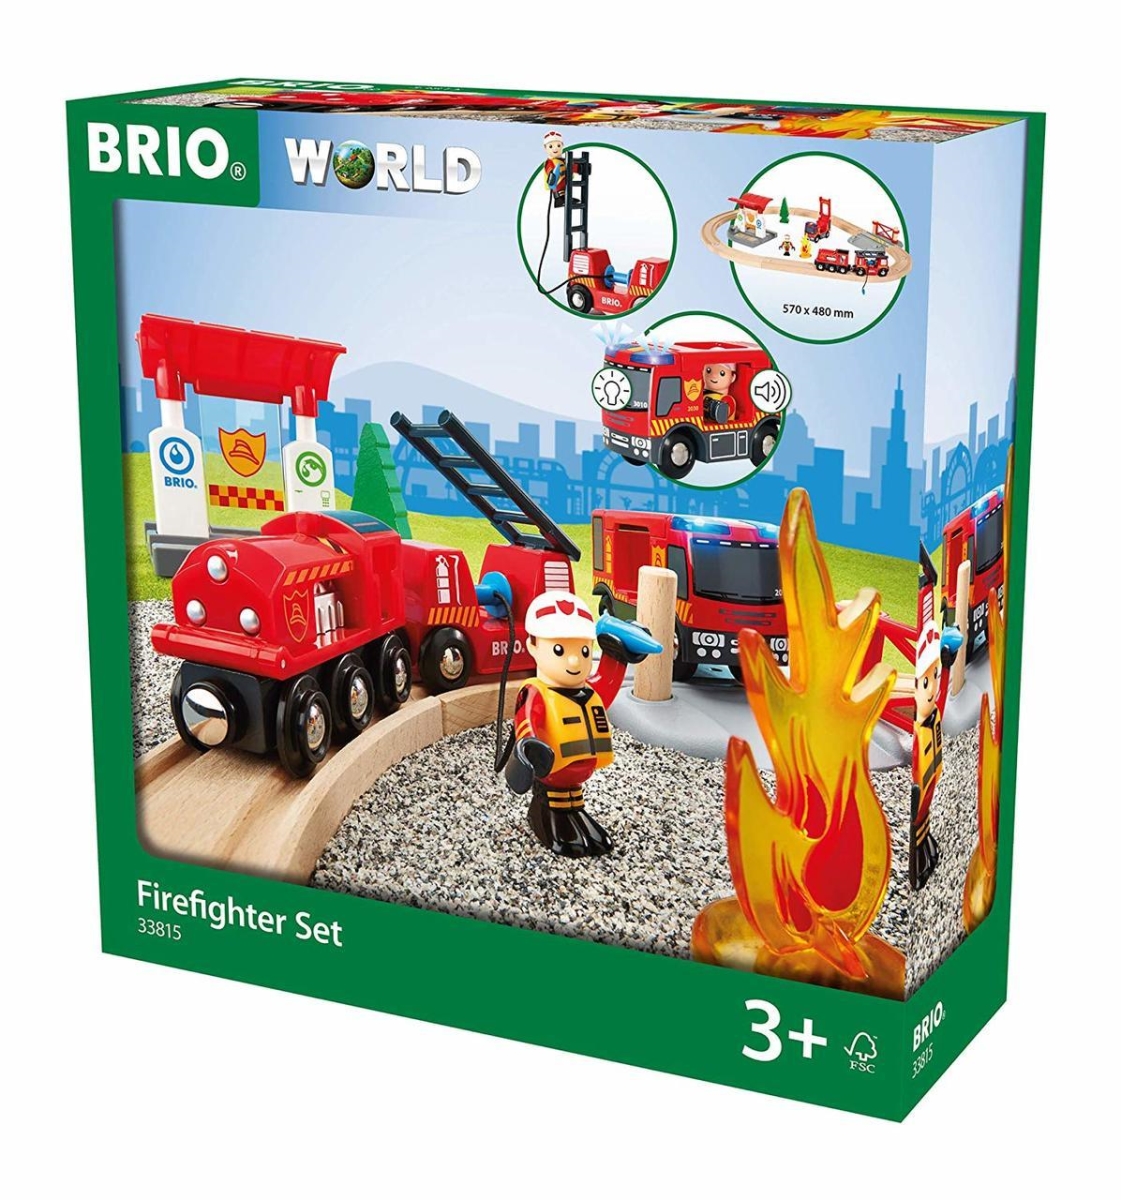 30369055 World - Rescue Firefighter Set